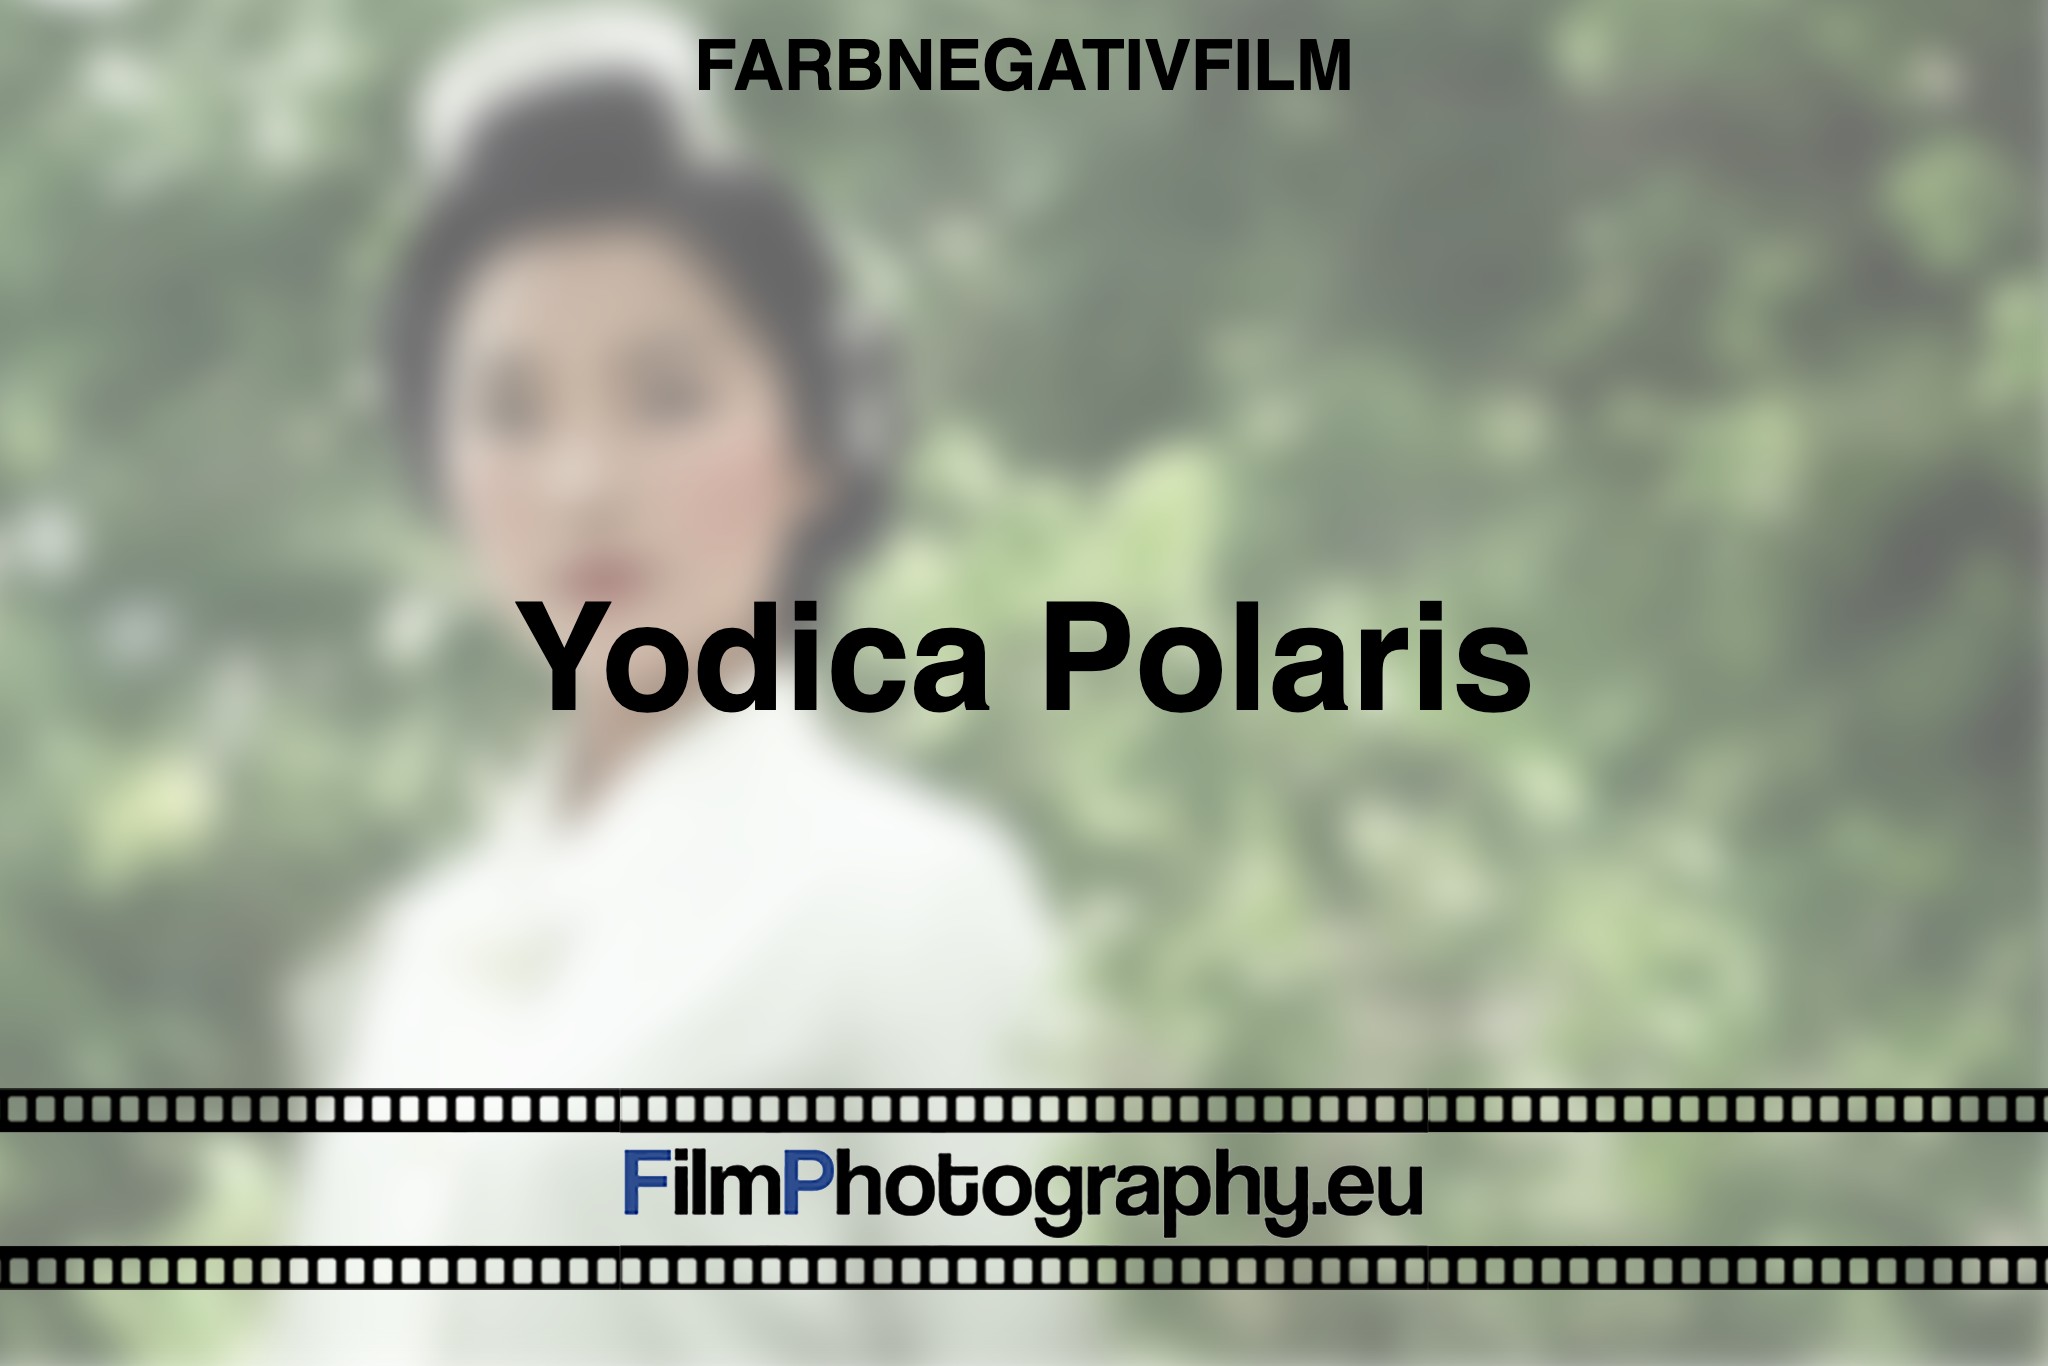 yodica-polaris-farbnegativfilm-bnv